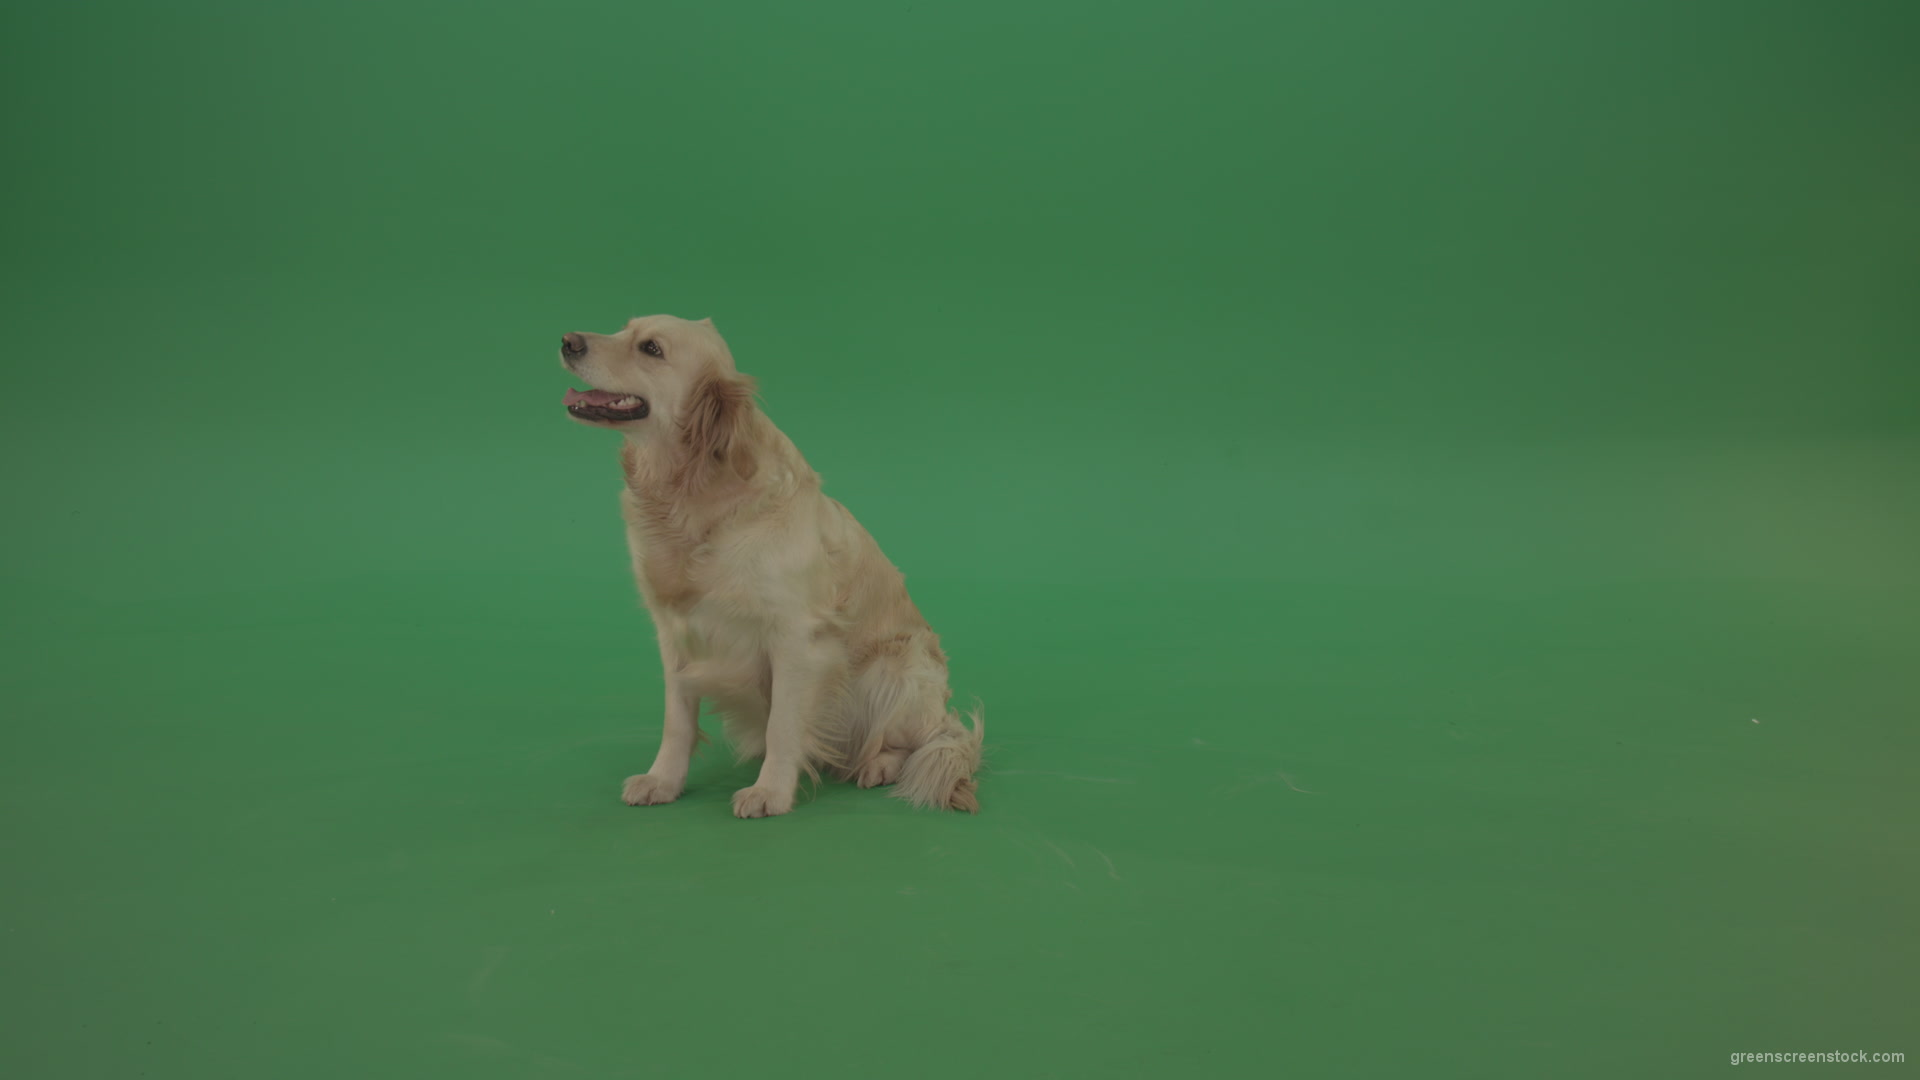 Golden-Retriever-Gun-Dog-sittin-and-eat-isolated-on-green-screen-4K-video-footage_004 Green Screen Stock